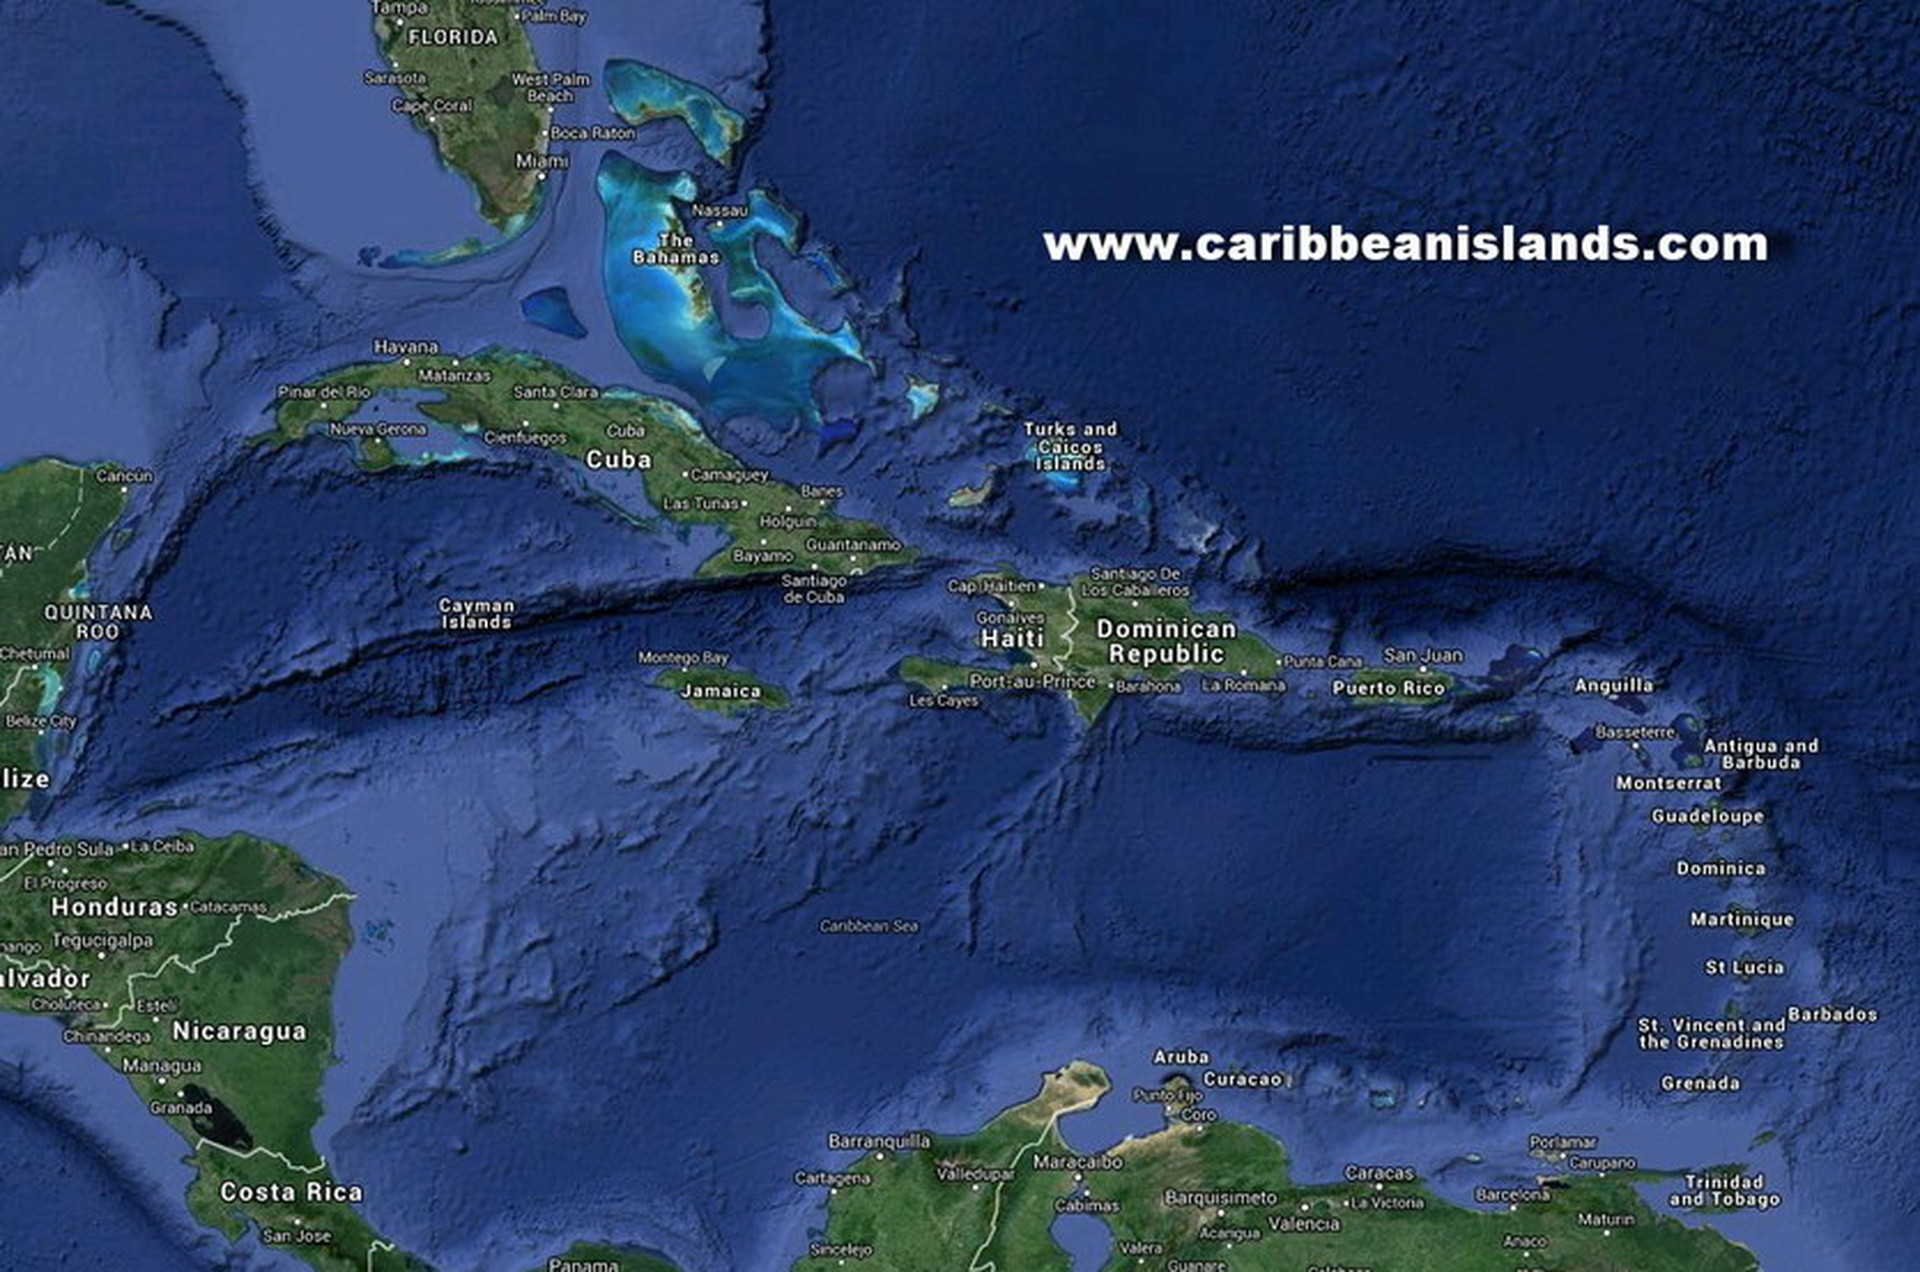 Caribbean islands, Caribbean Sea, and Caribbean countries map